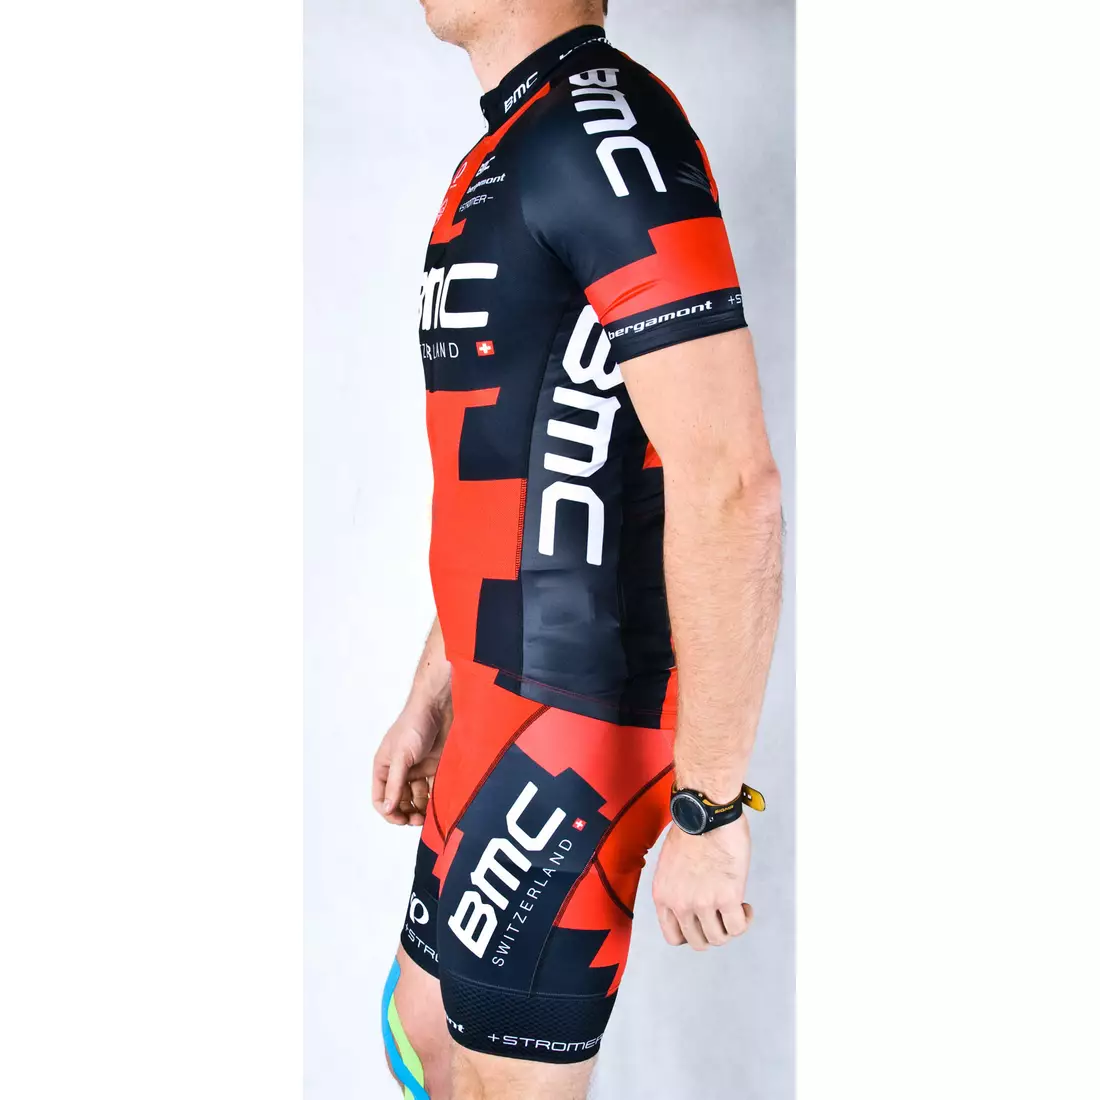 PEARL IZUMI PRO BMC 2014 - men's cycling jersey C1121327-4JZ